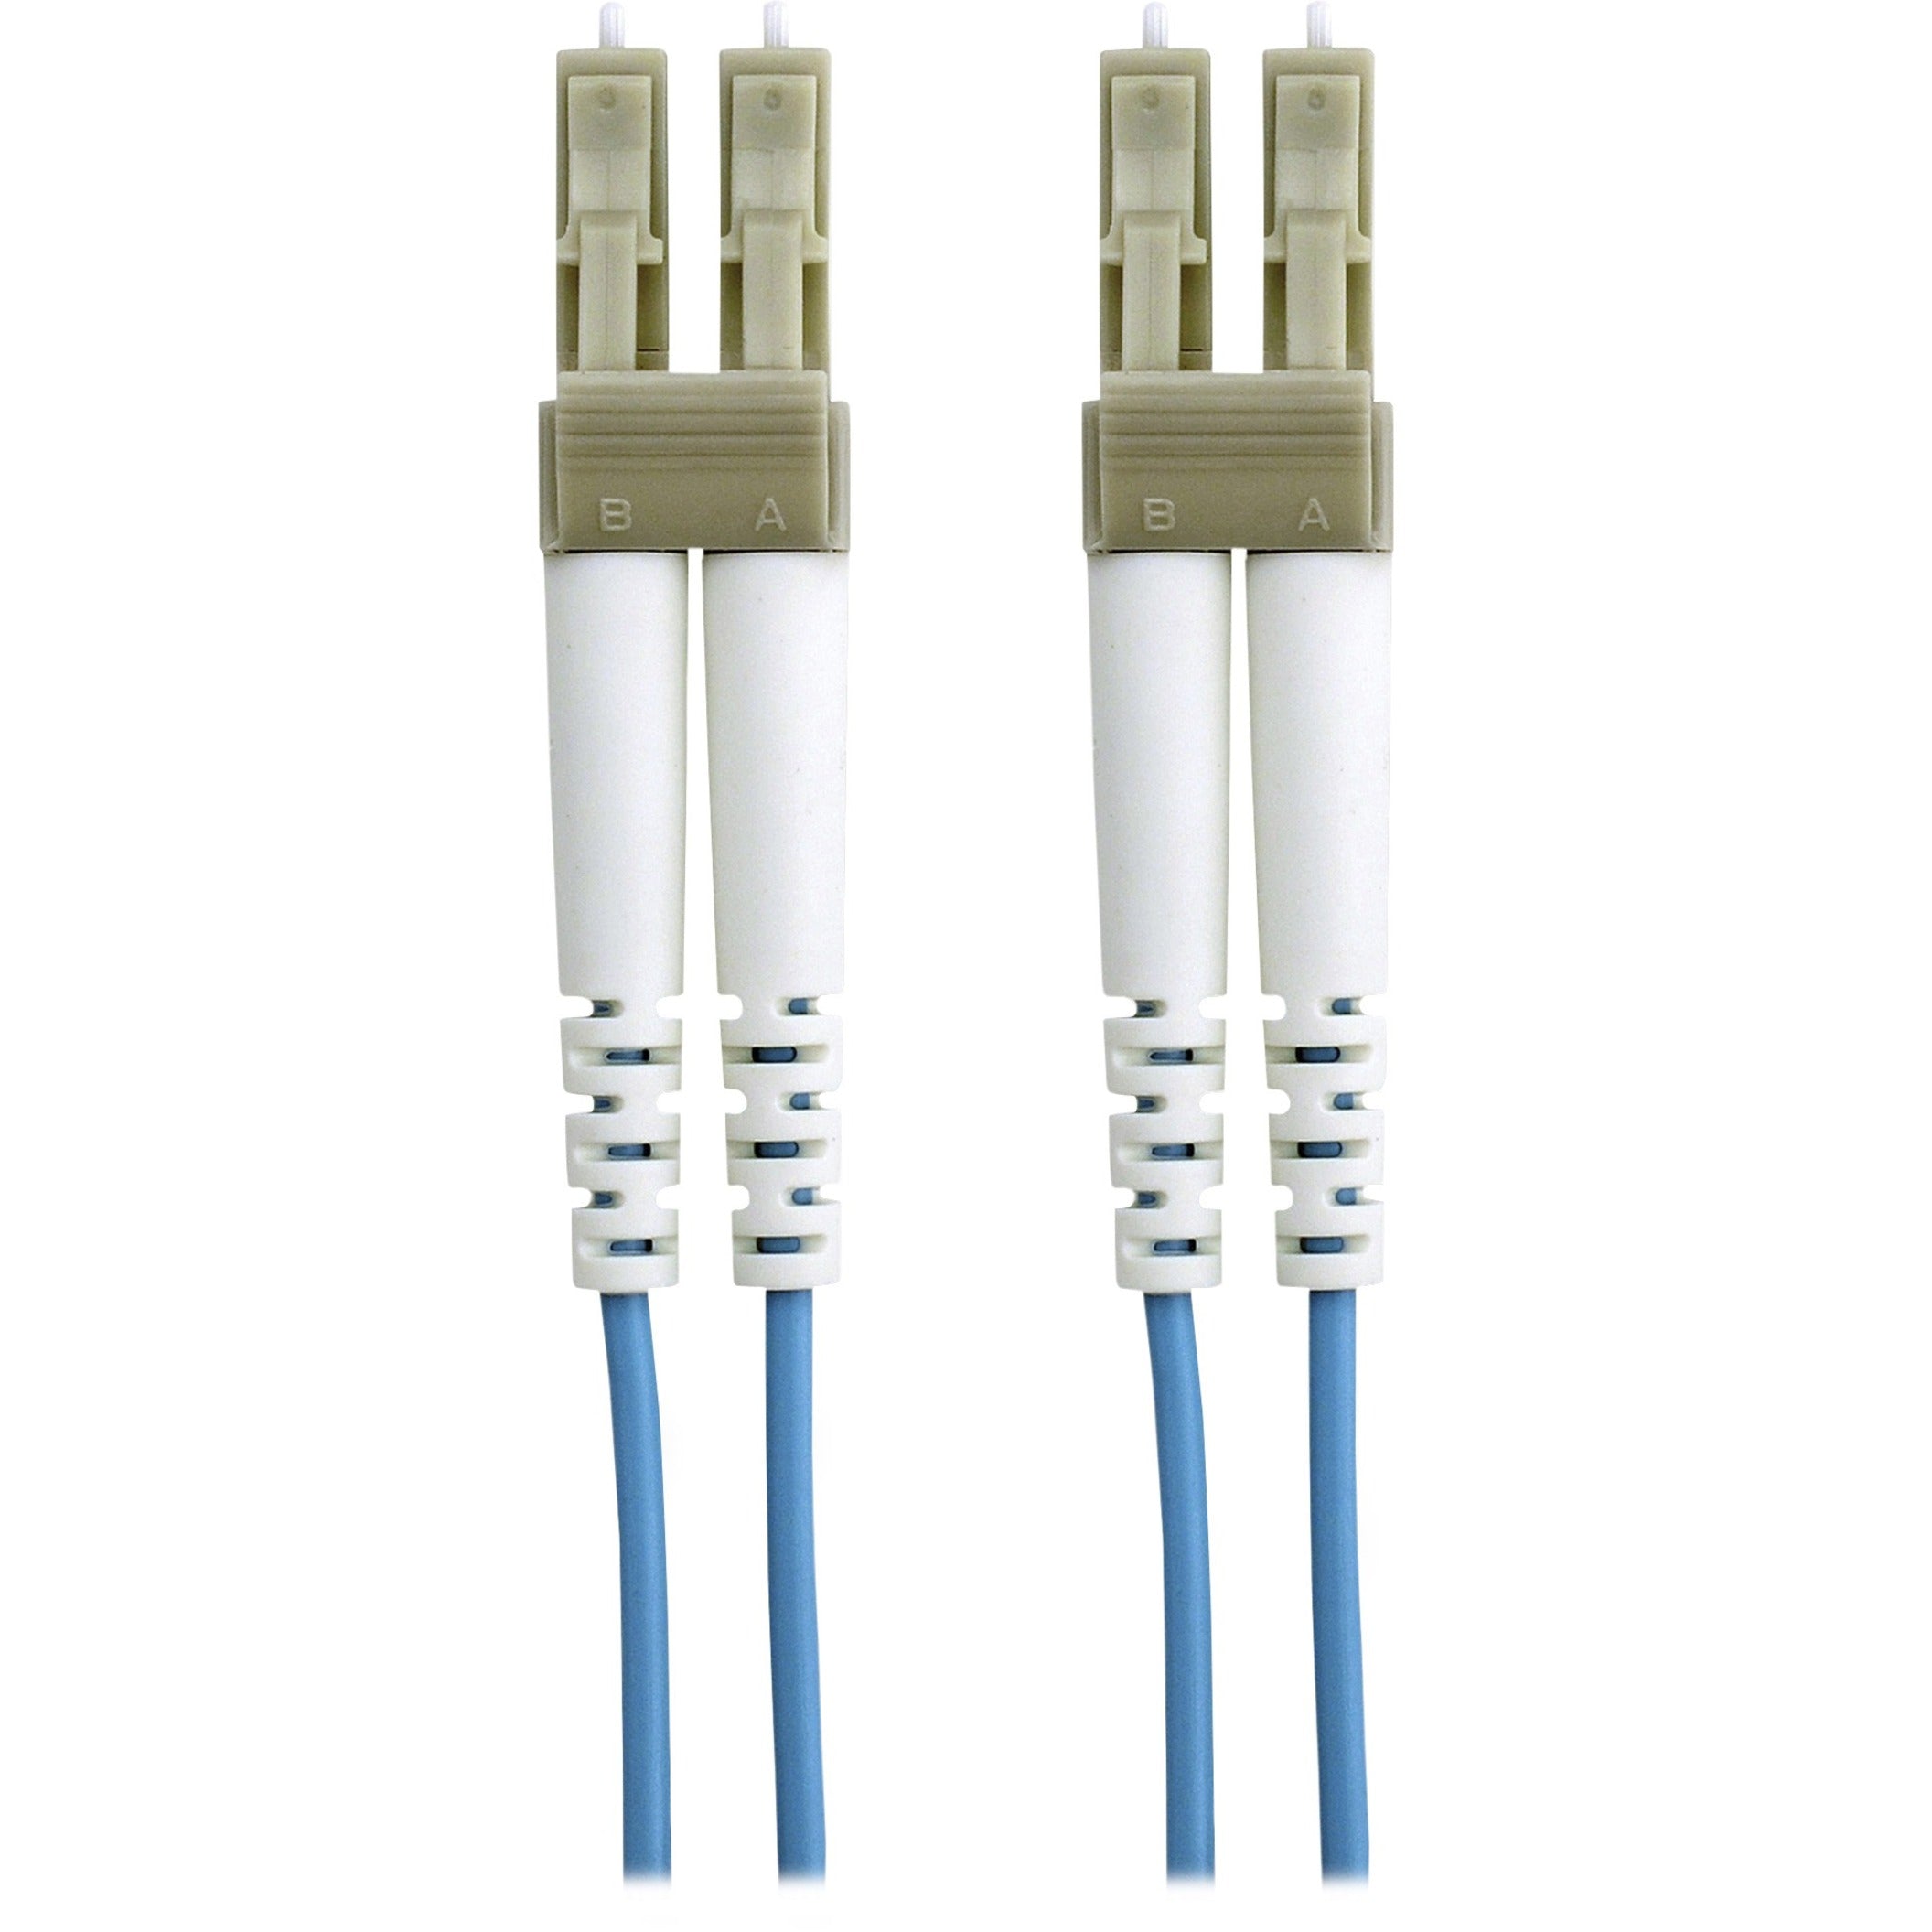 Belkin F2F402LL-01M-G 10GB Aqua Fiber Optic Cable 3.28 ft Multi-mode Patch Cable  Belkin Câble Optique Aqua 10GB F2F402LL-01M-G Fibre 1 m Multimode Câble de Raccordement